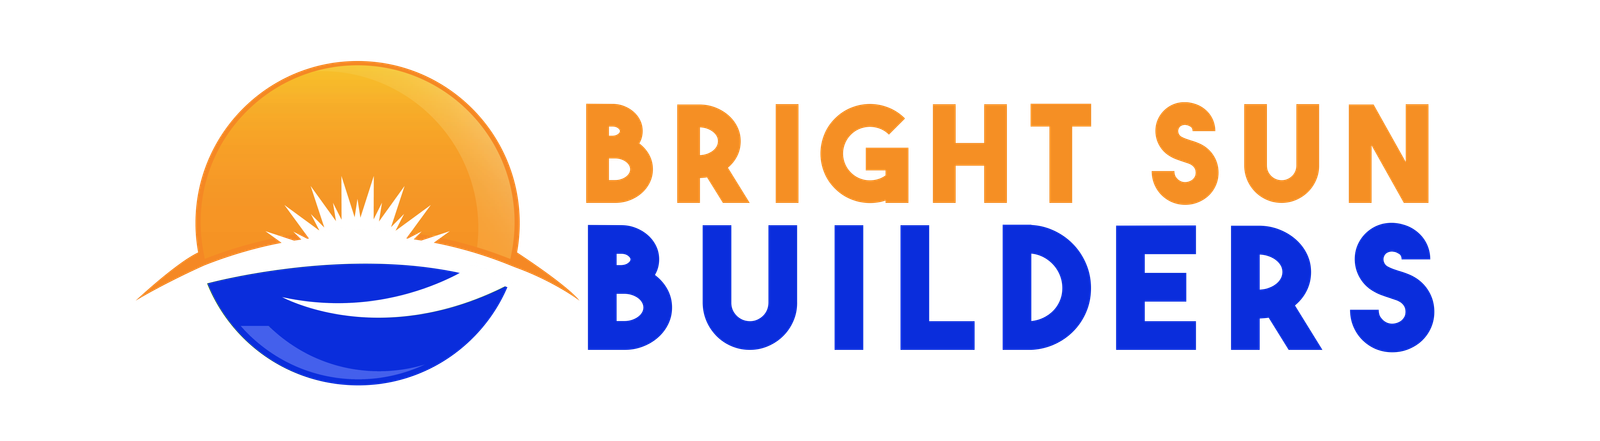 Brightsun Builders Ltd